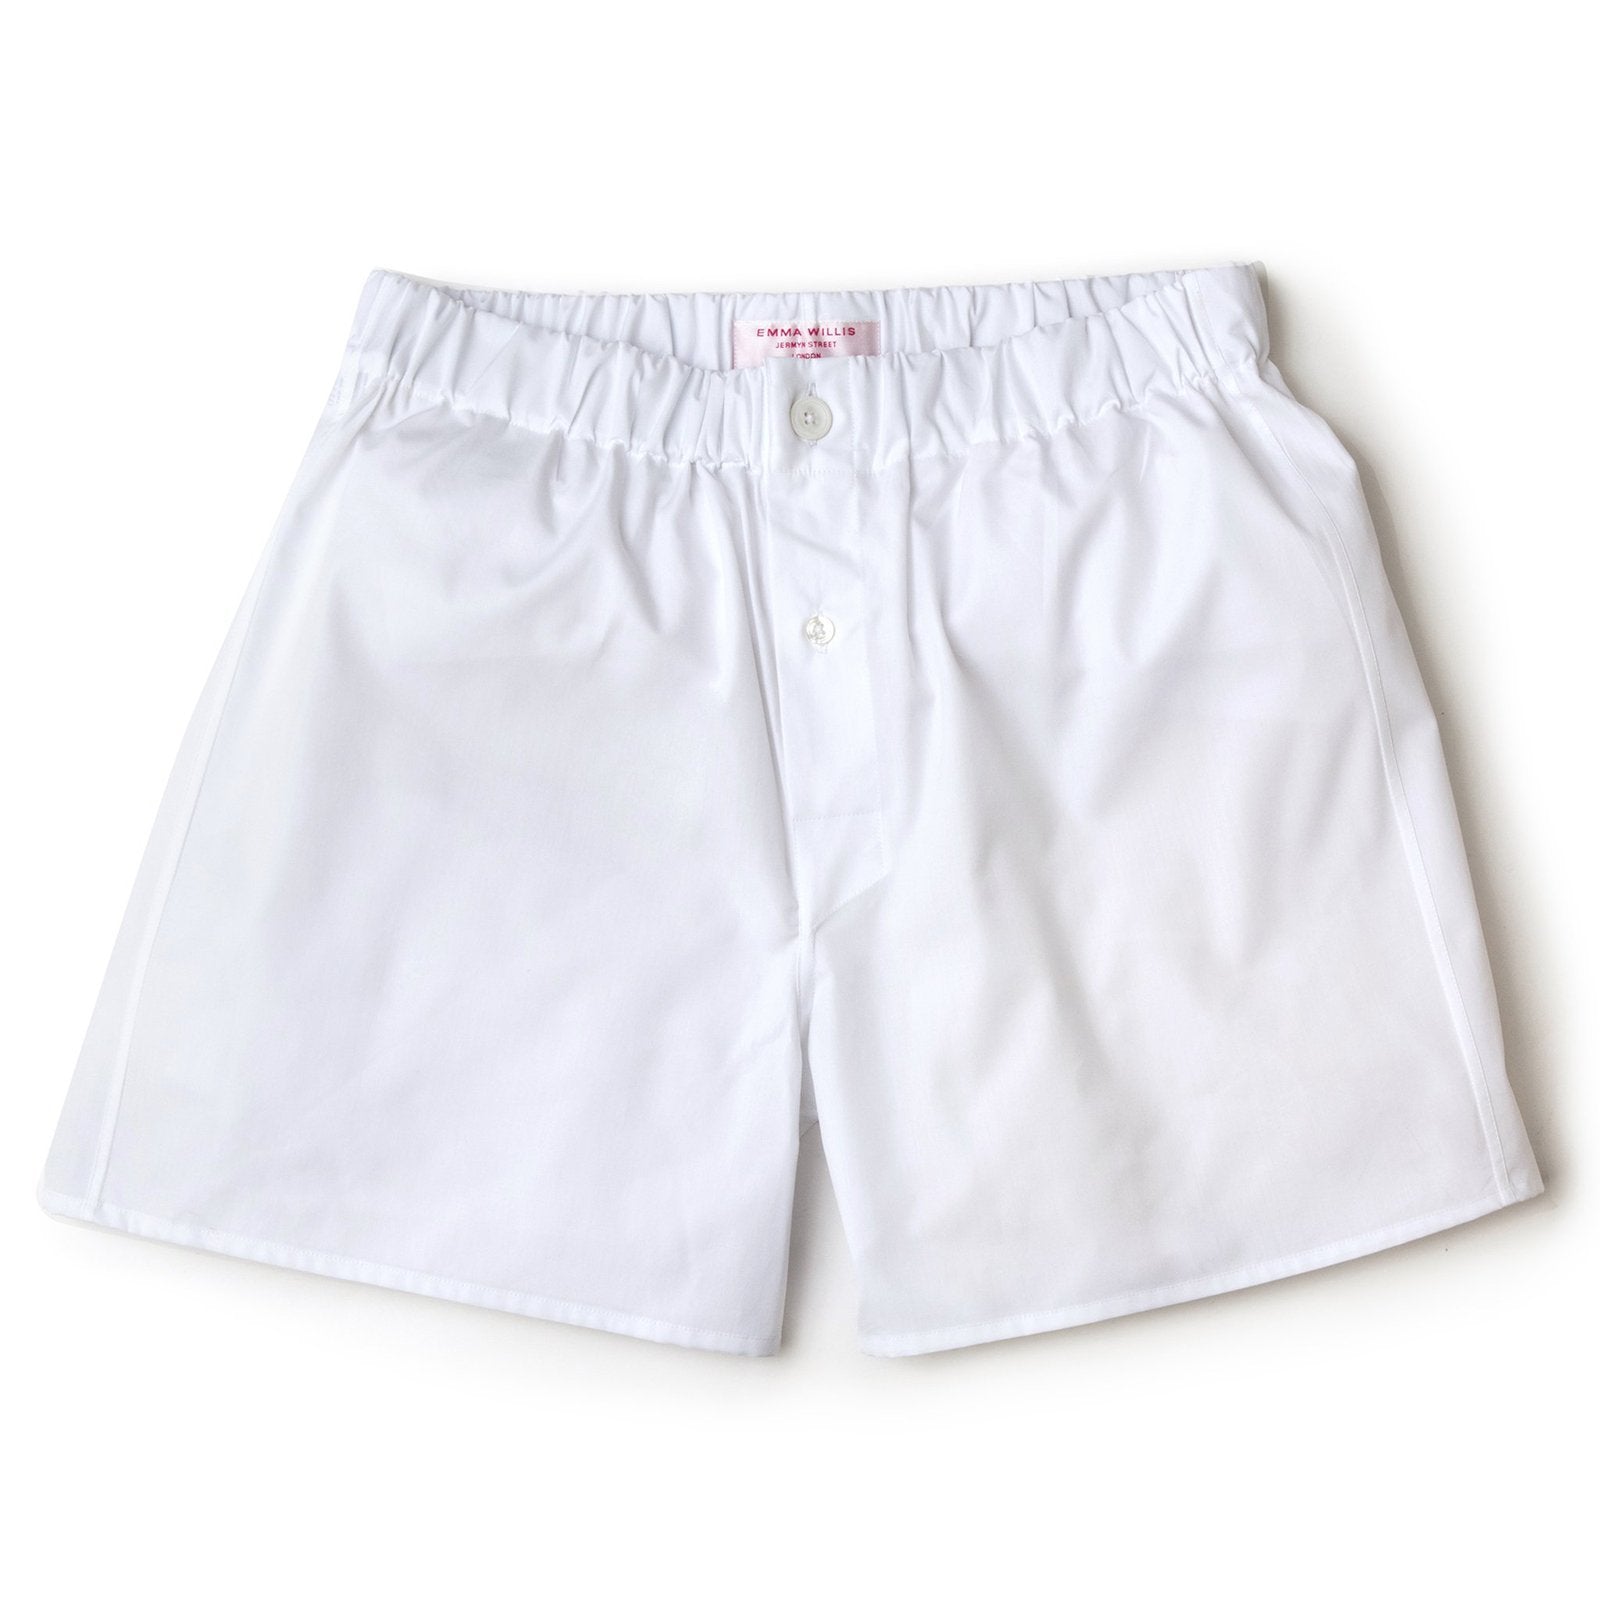 White Superior Cotton Boxer Shorts - Slim Fit freeshipping - Emma Willis